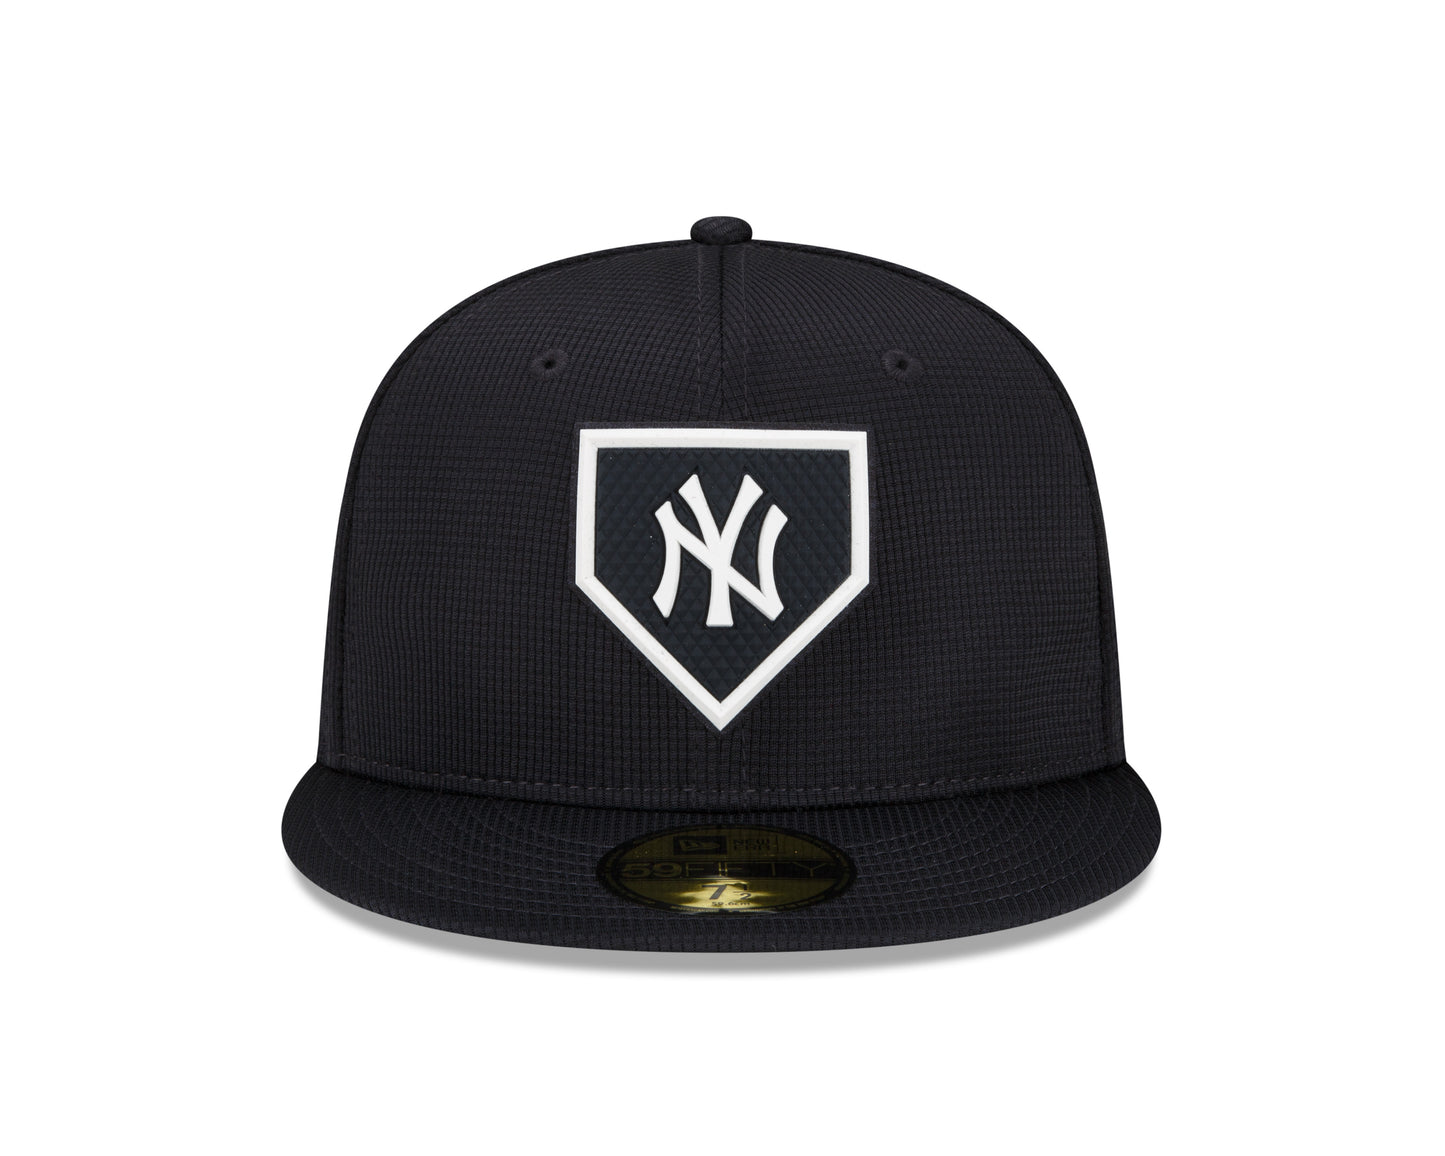 New York Yankees MLB New Era Club House 59Fifty Hat